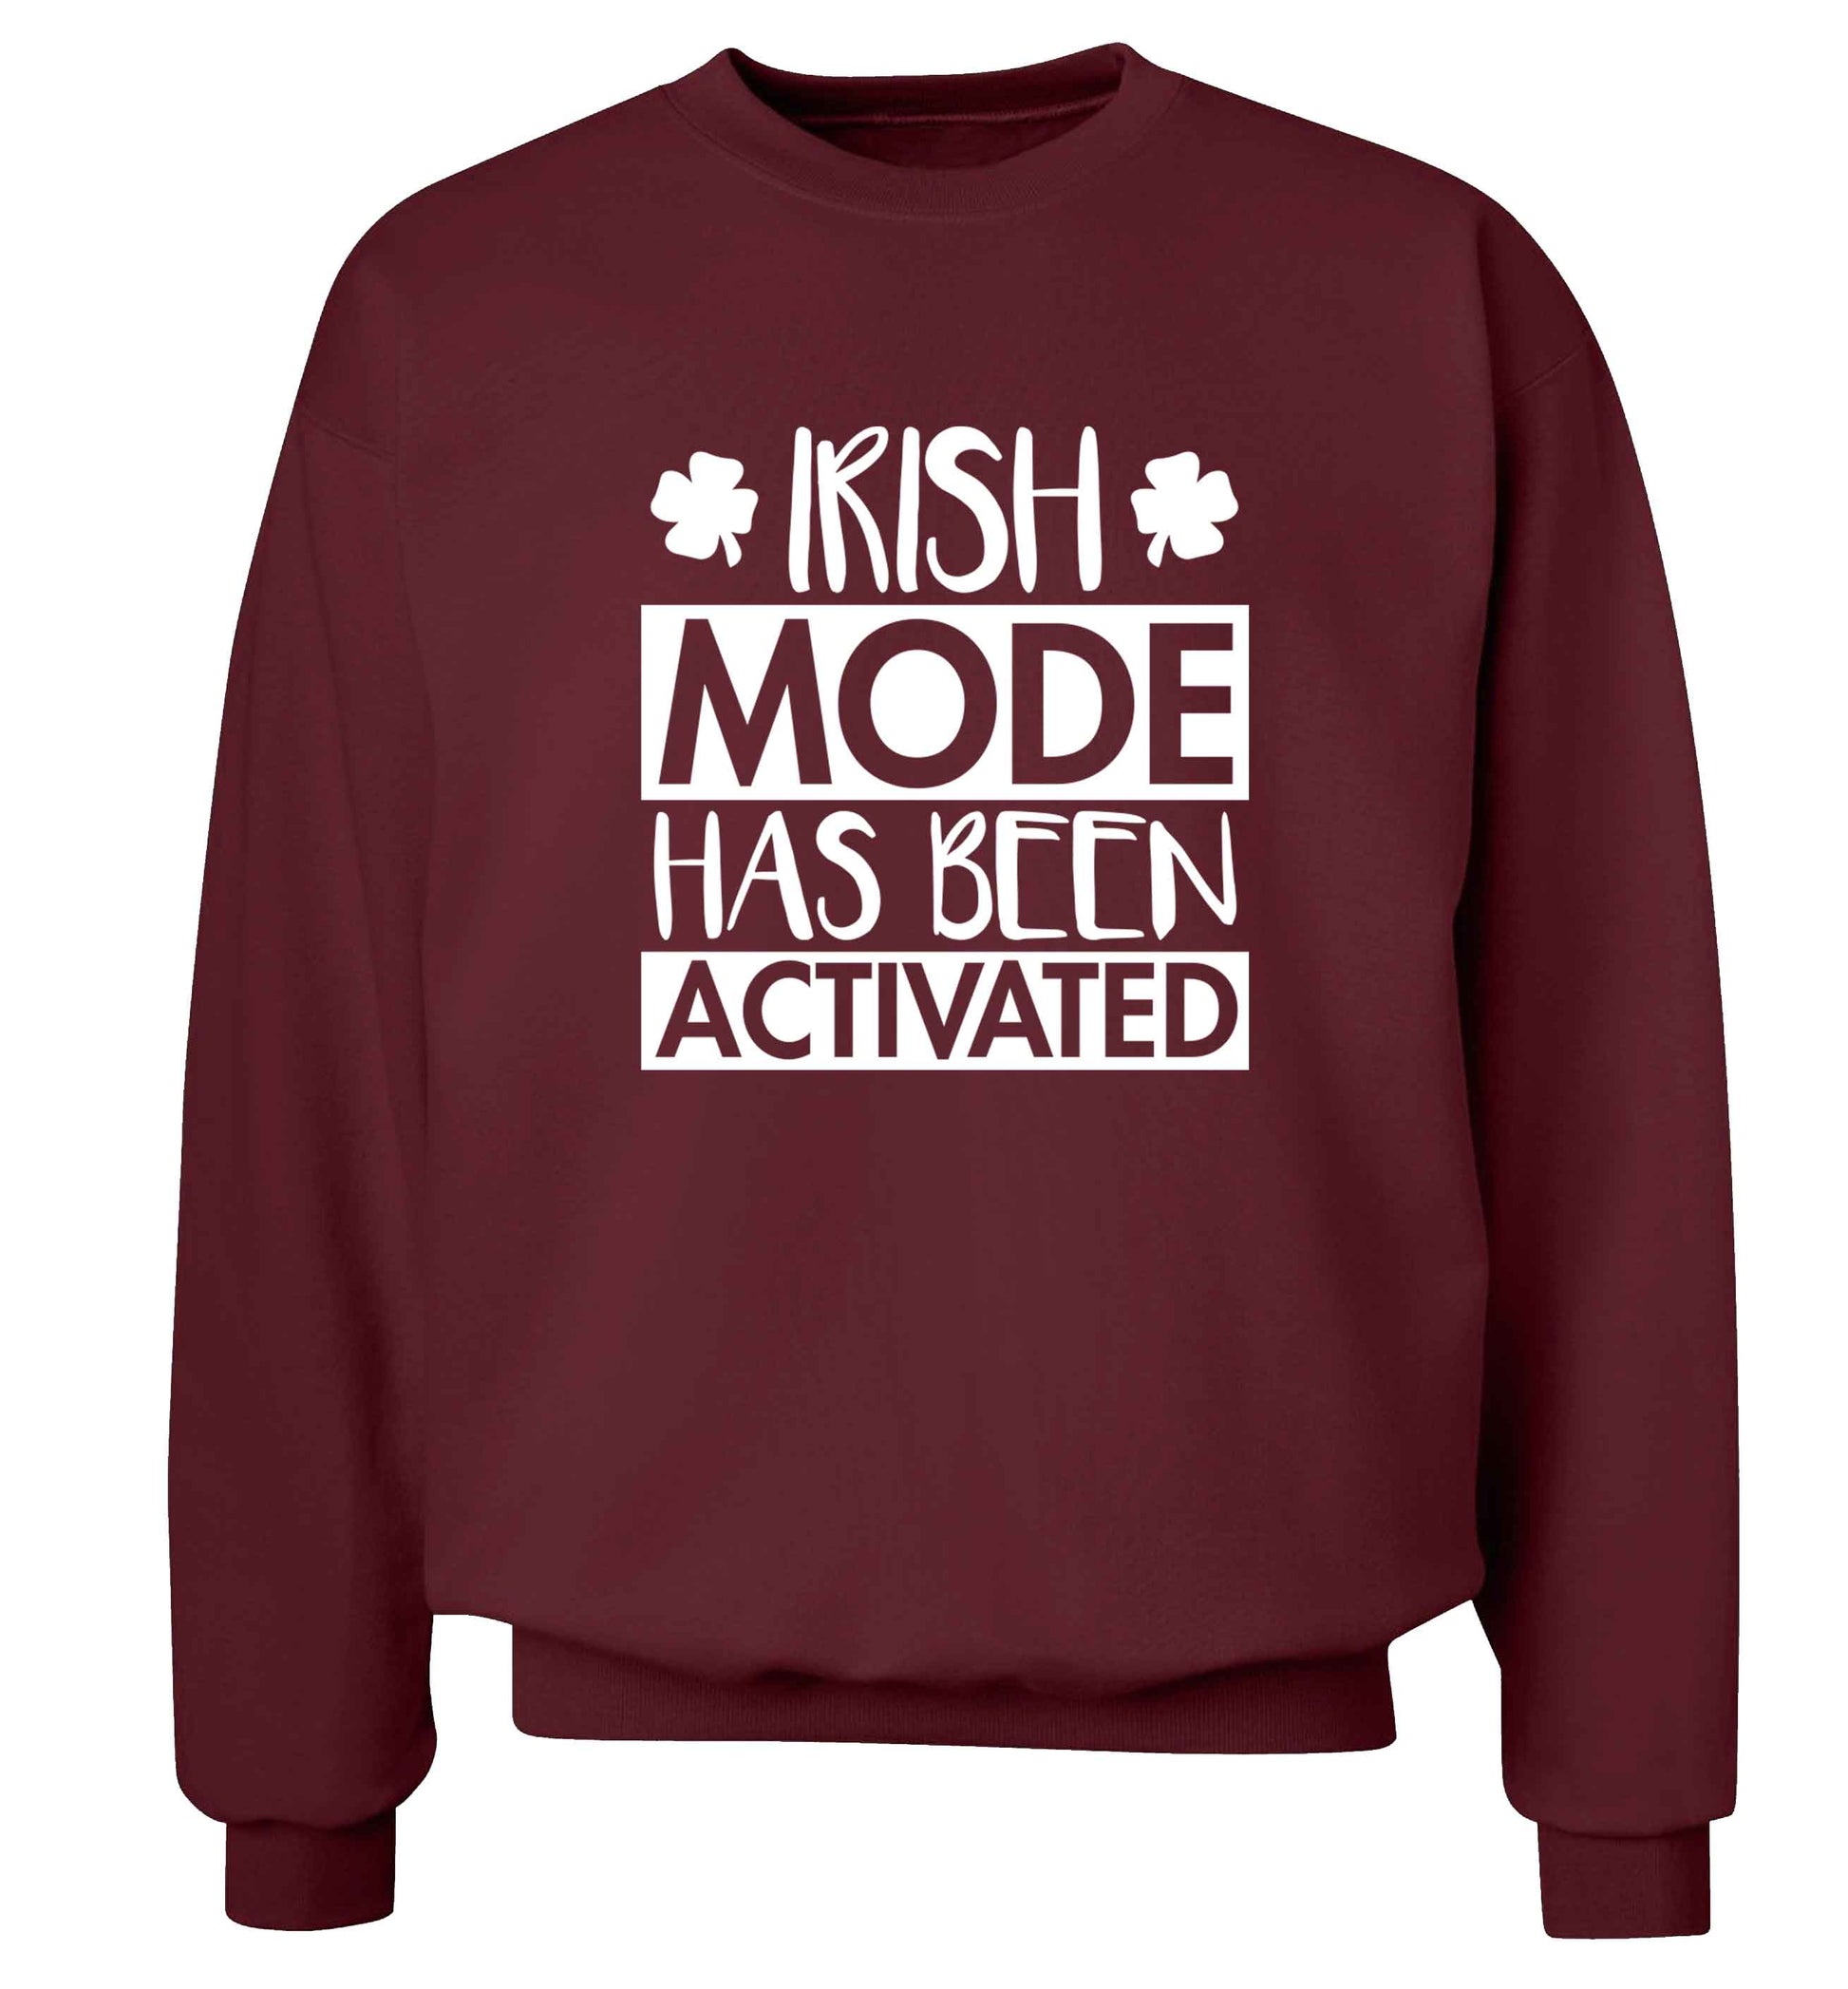 Irish mode has been activated adult's unisex maroon sweater 2XL